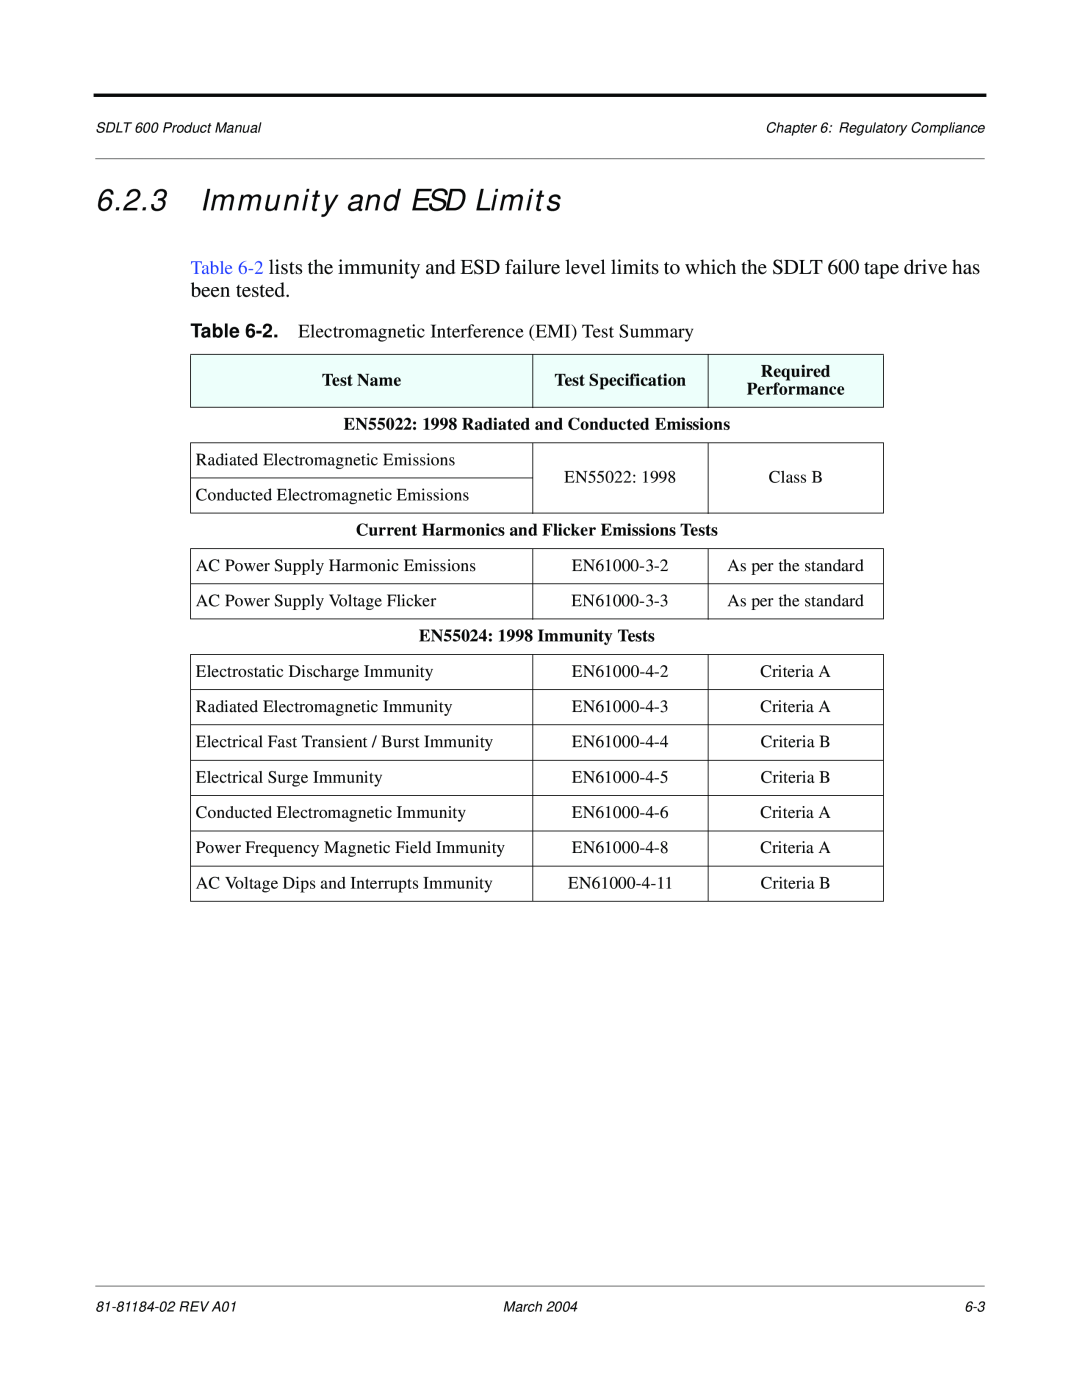 Tandberg Data 600 manual Immunity and ESD Limits, 2. Electromagnetic Interference EMI Test Summary 